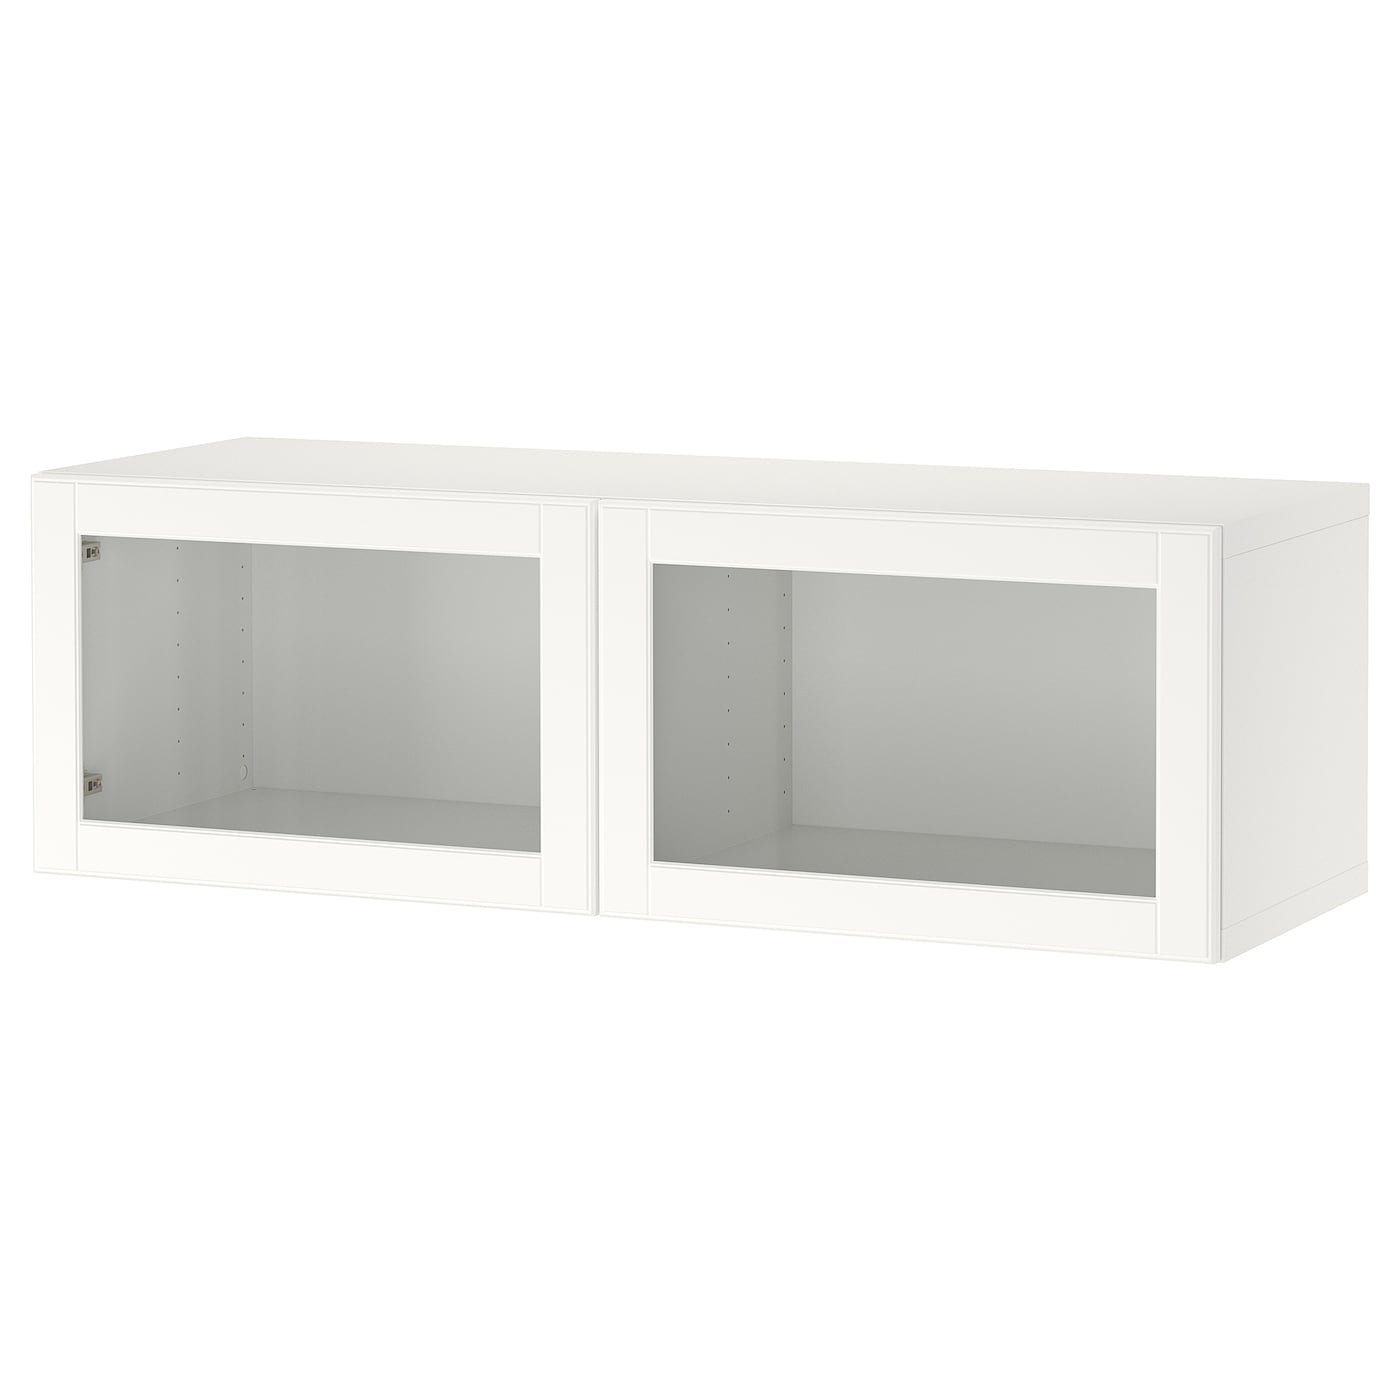 Навесной шкаф - IKEA BESTÅ/BESTA, 120x43x38 см, белый, БЕСТО ИКЕА